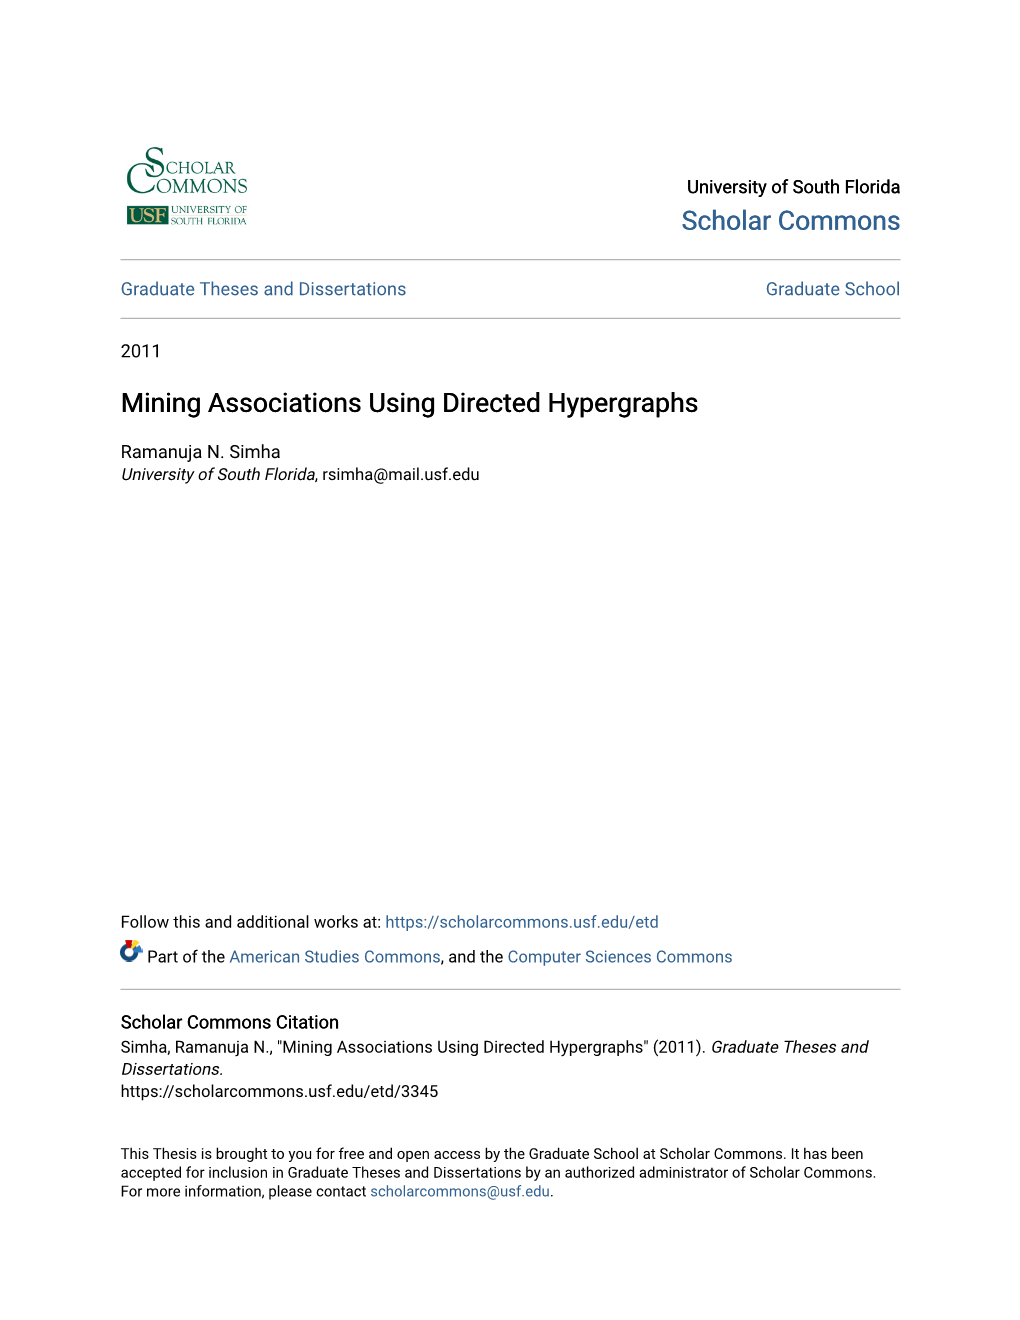 Mining Associations Using Directed Hypergraphs